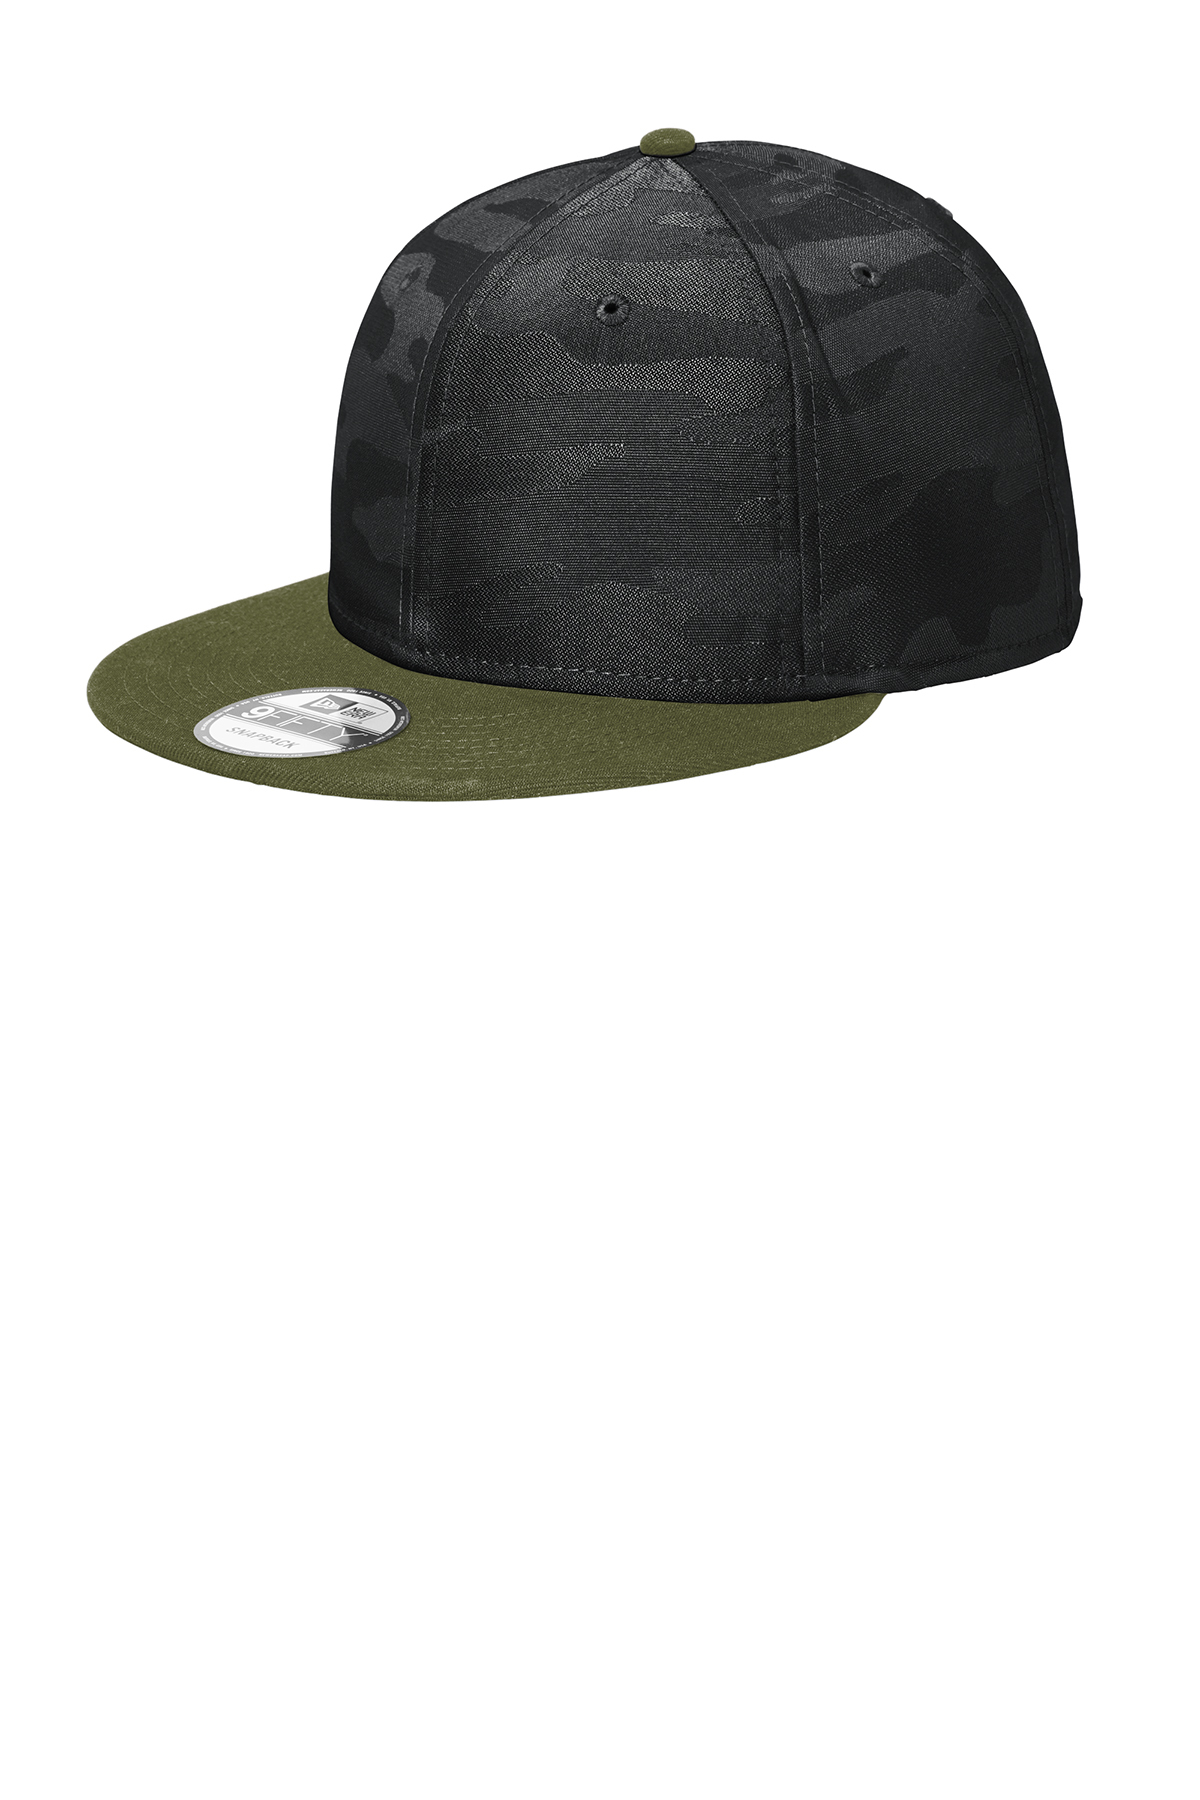 Camo Icon 1000 VERTIXAL Flatbill Snapback Hat/Cap